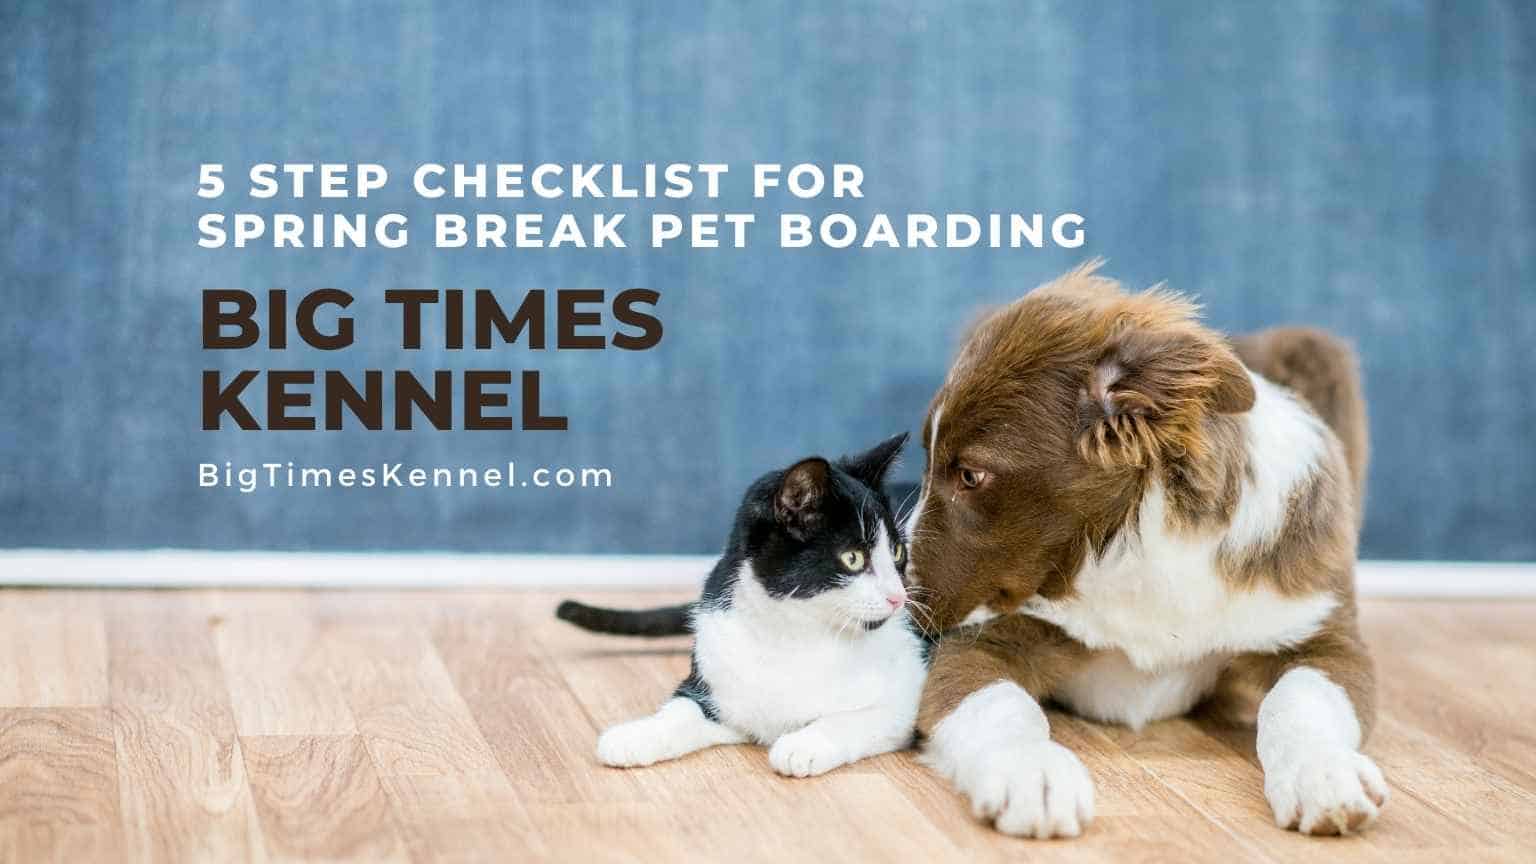 5 Step Checklist for Spring Break Pet Boarding